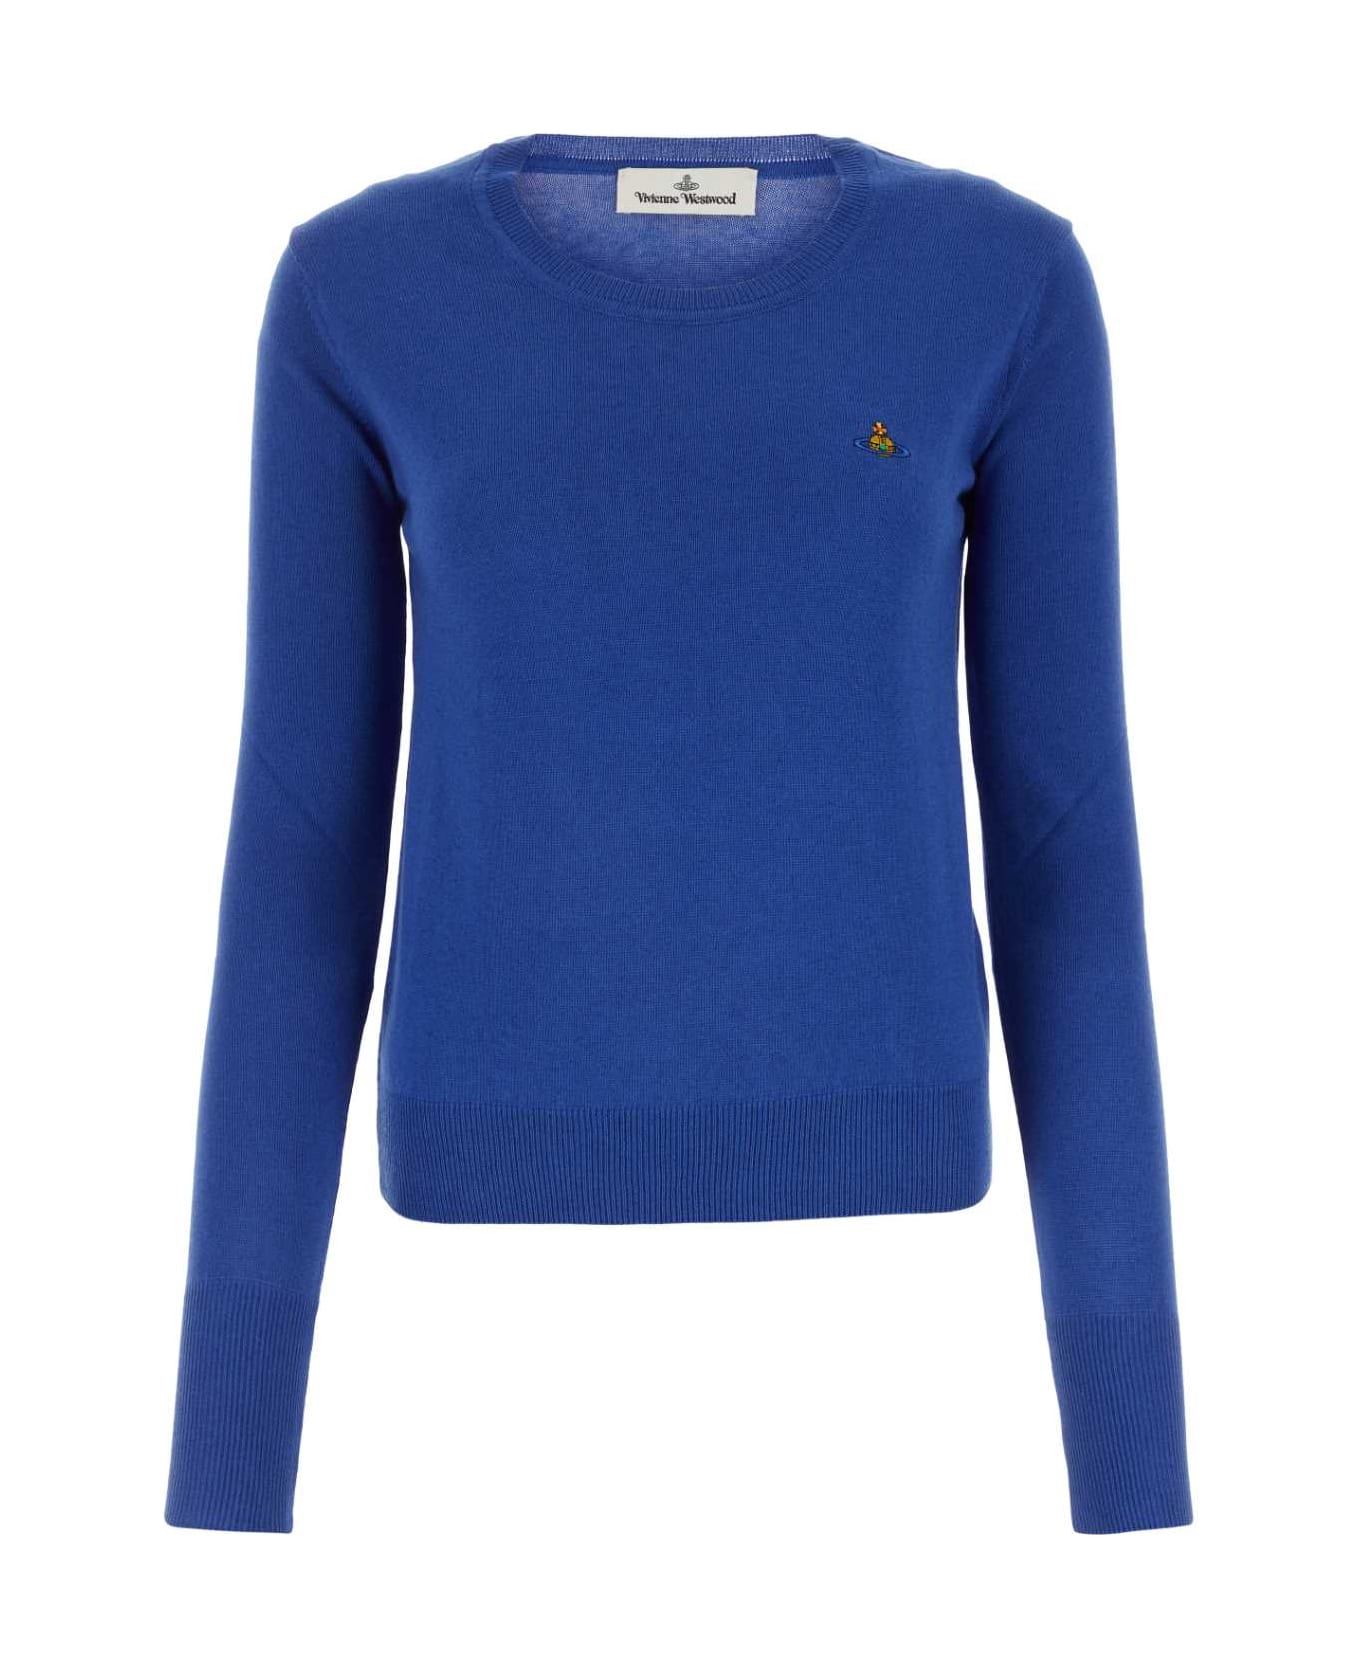 Vivienne Westwood Electric Blue Cotton Blend Bea Sweater - OCEAN